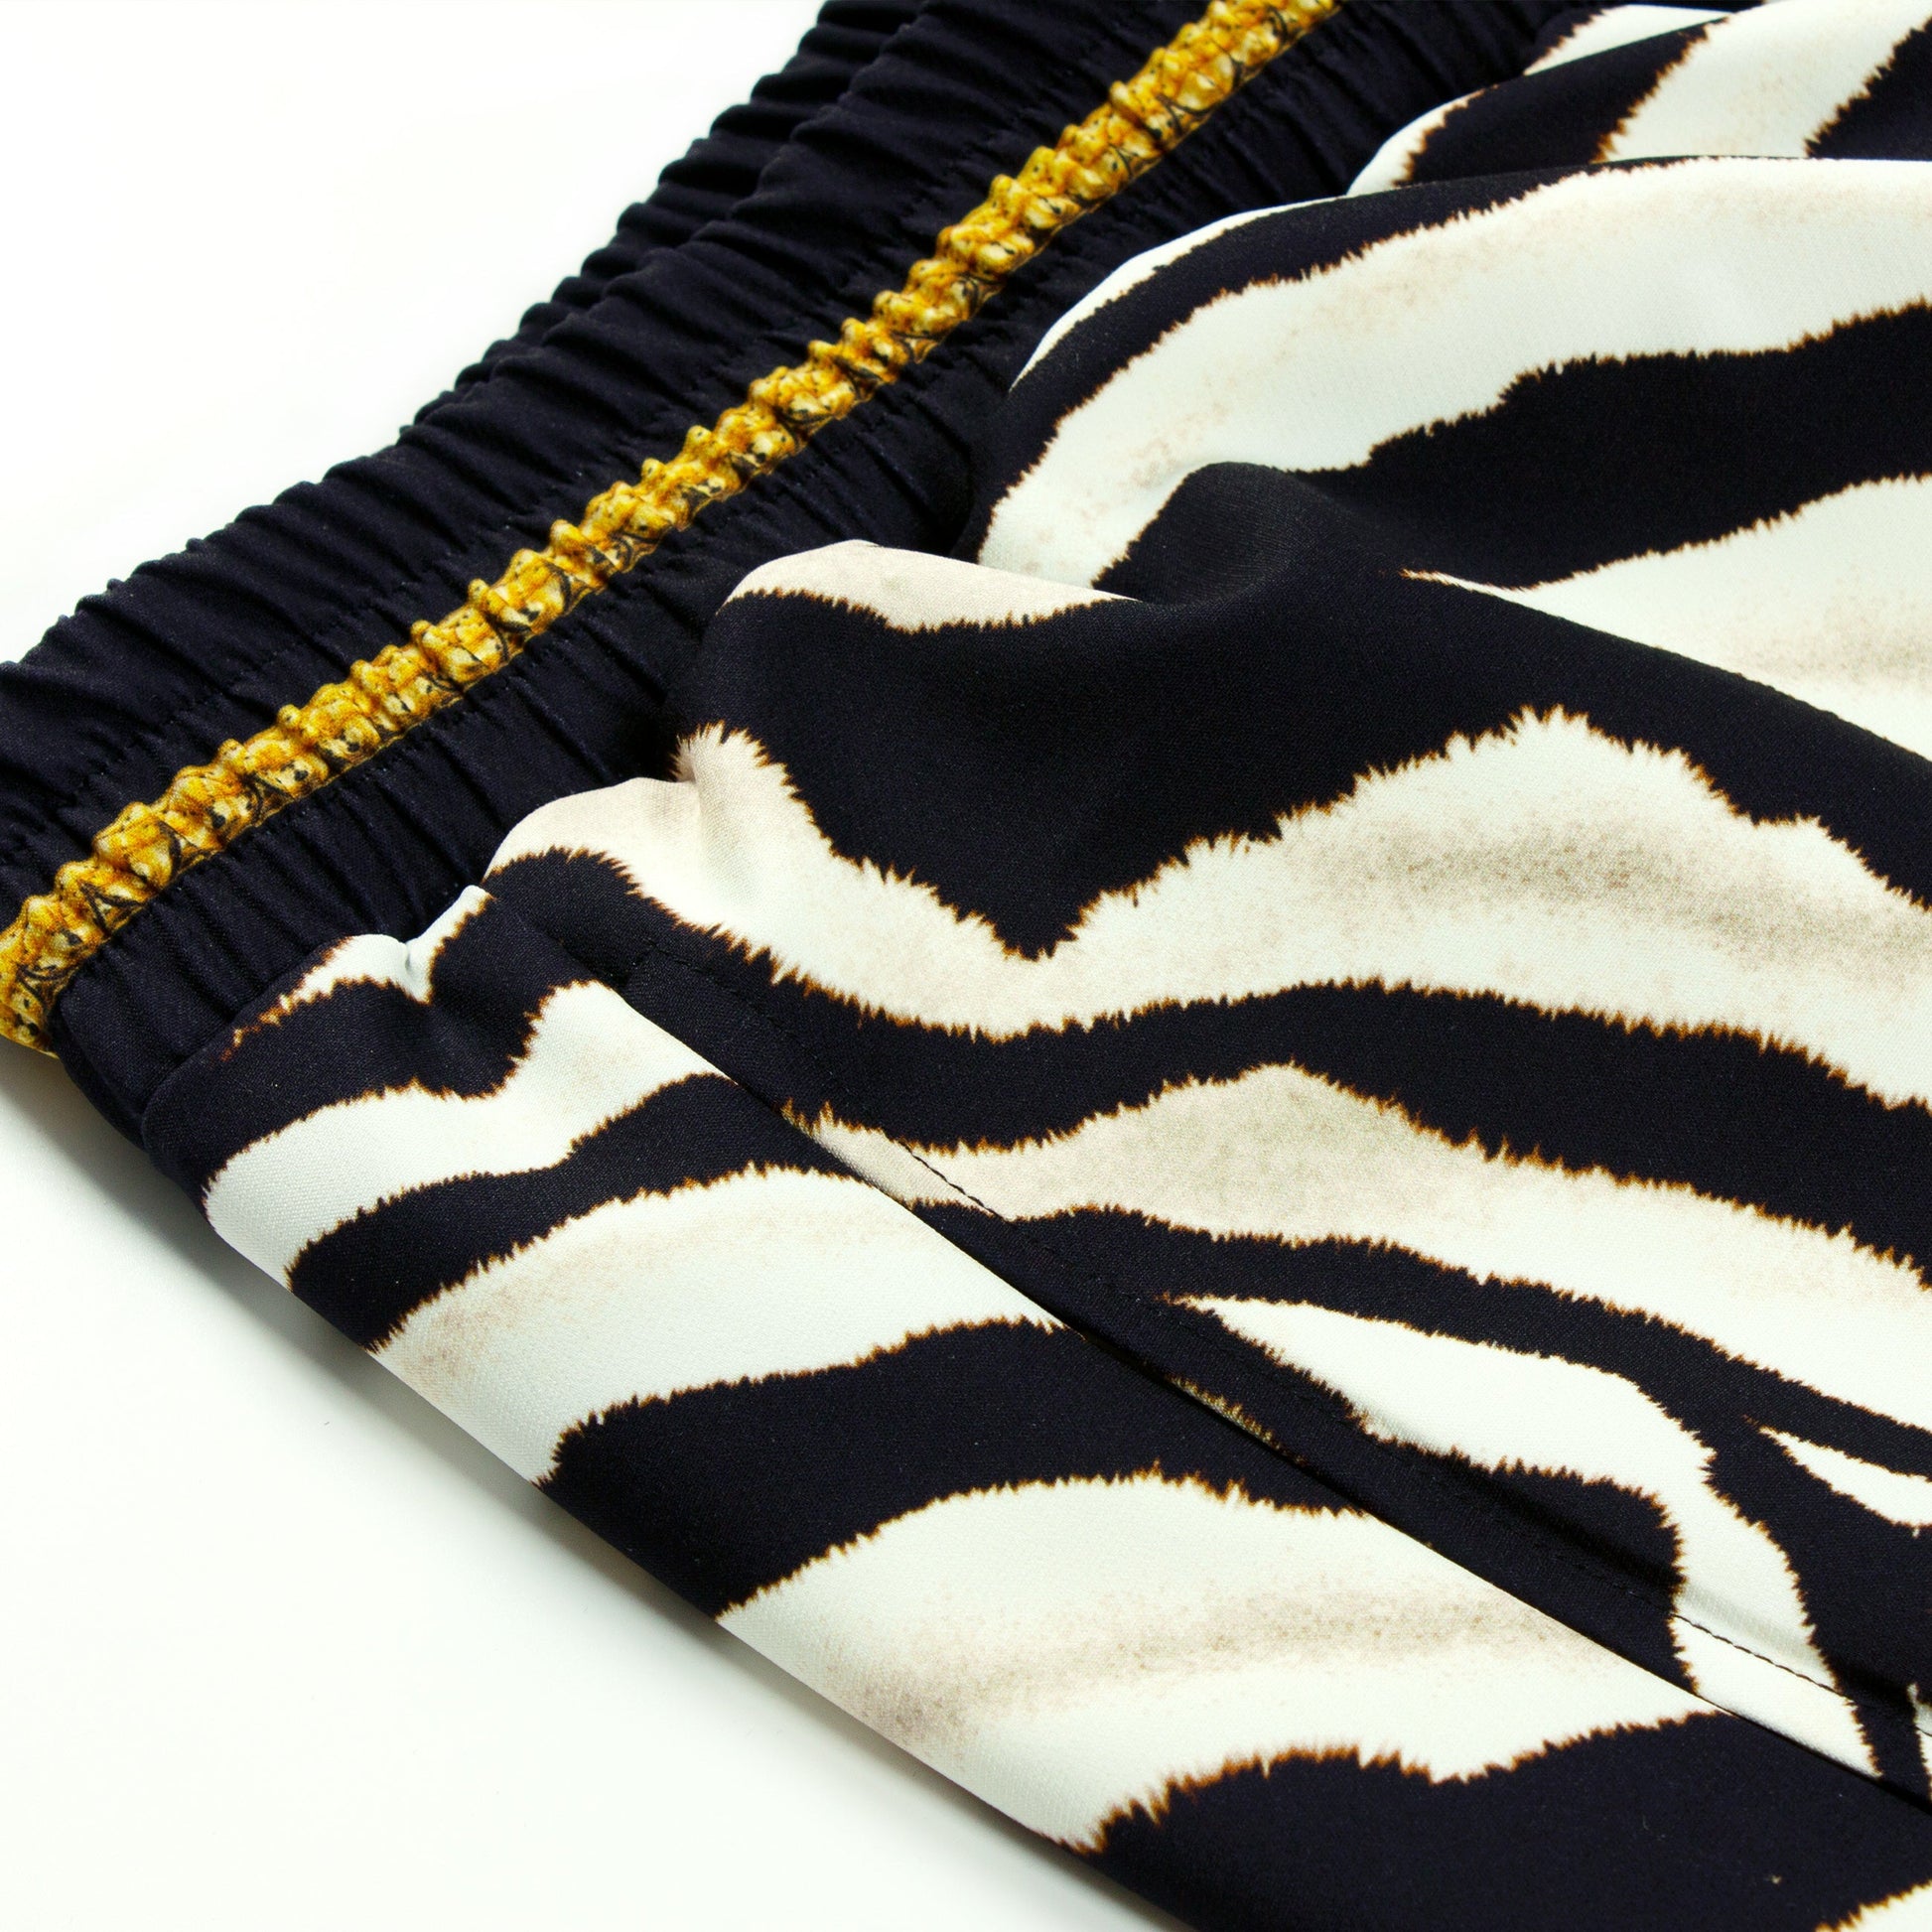 Wild Zebra Pattern Elastic Waistband Casual Shorts Jonvidesign